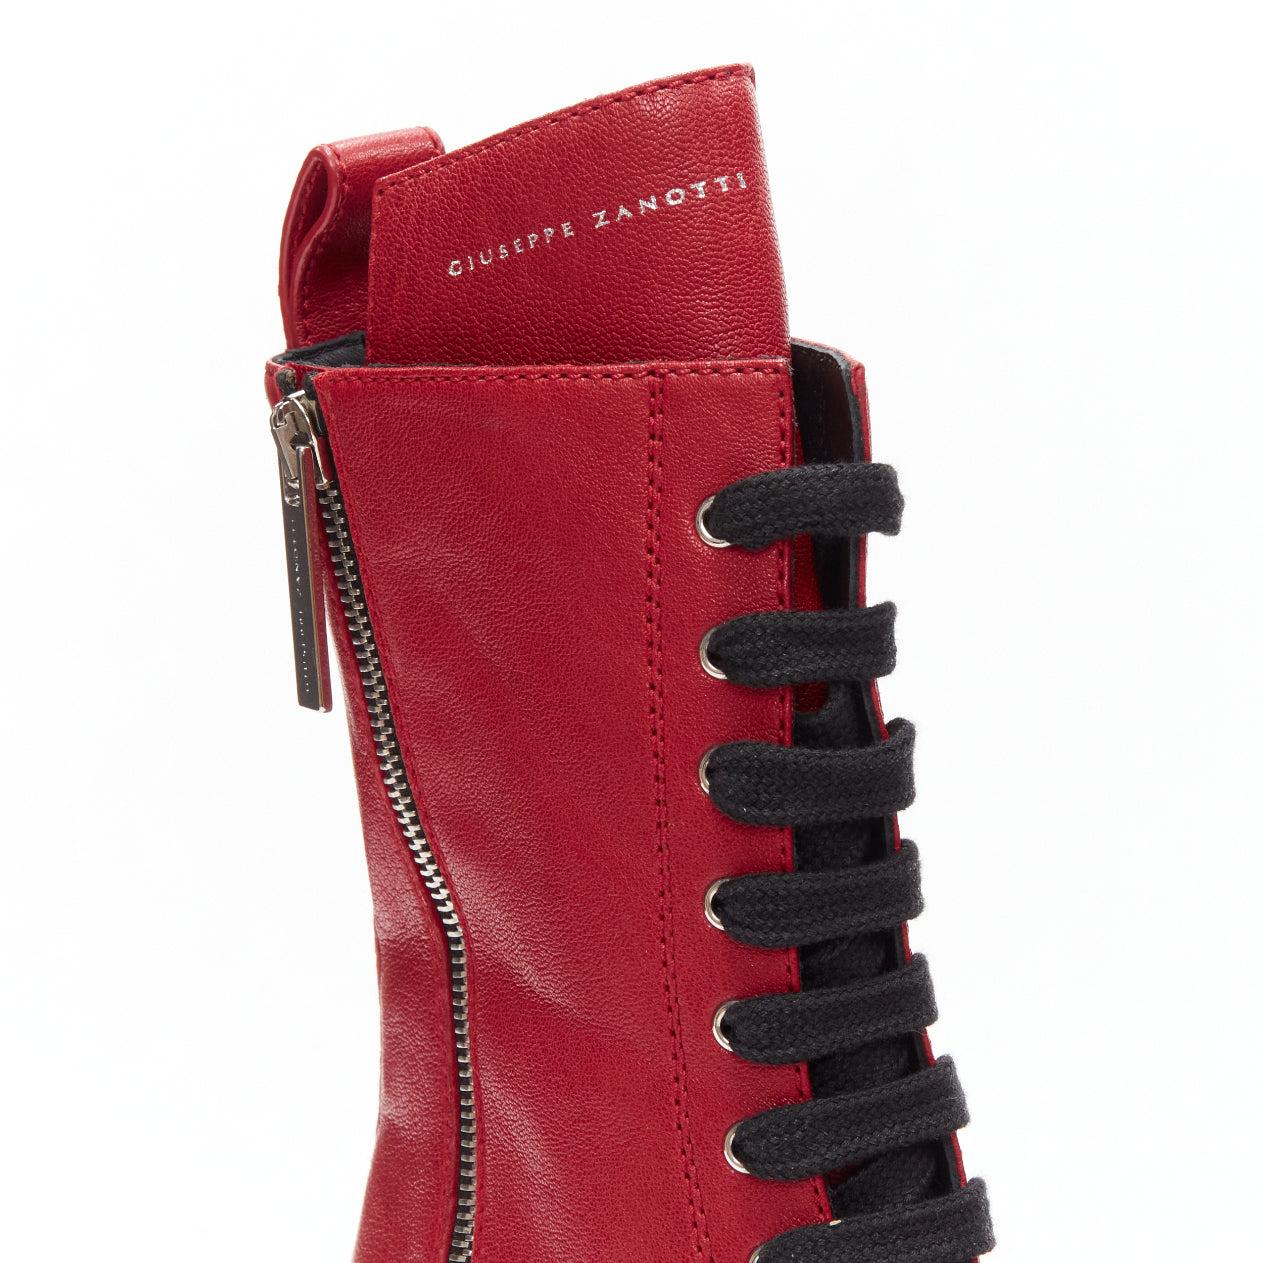 GIUSEPPE ZANOTTI Apocalypse red leather side zip combat boots EU39 For Sale 2